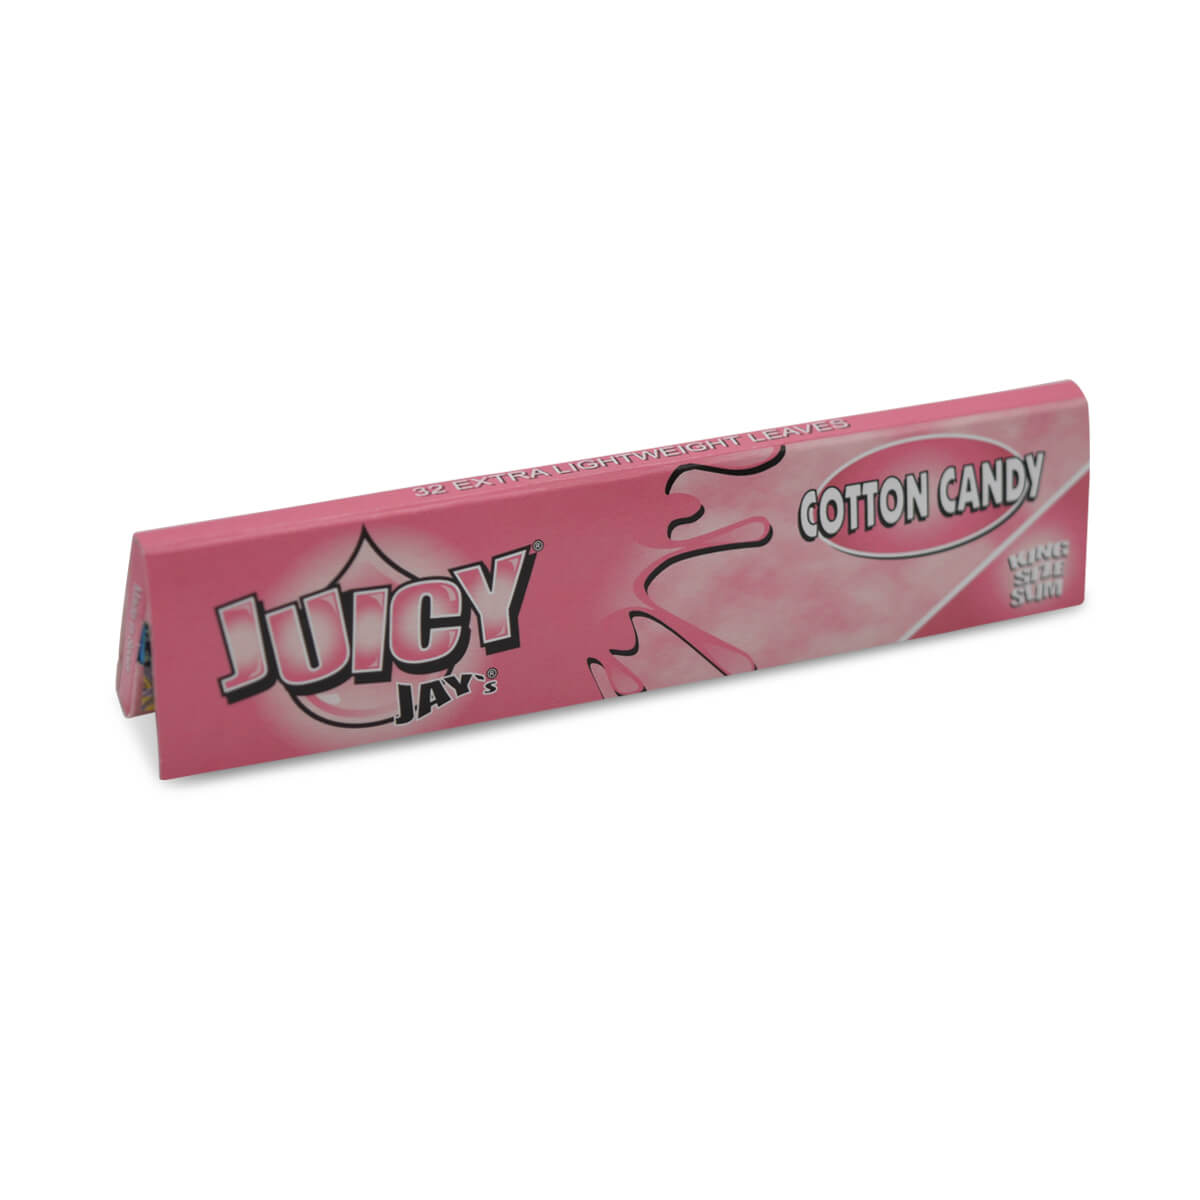 Juicy Jays Cotton Candy - Smokerhontas